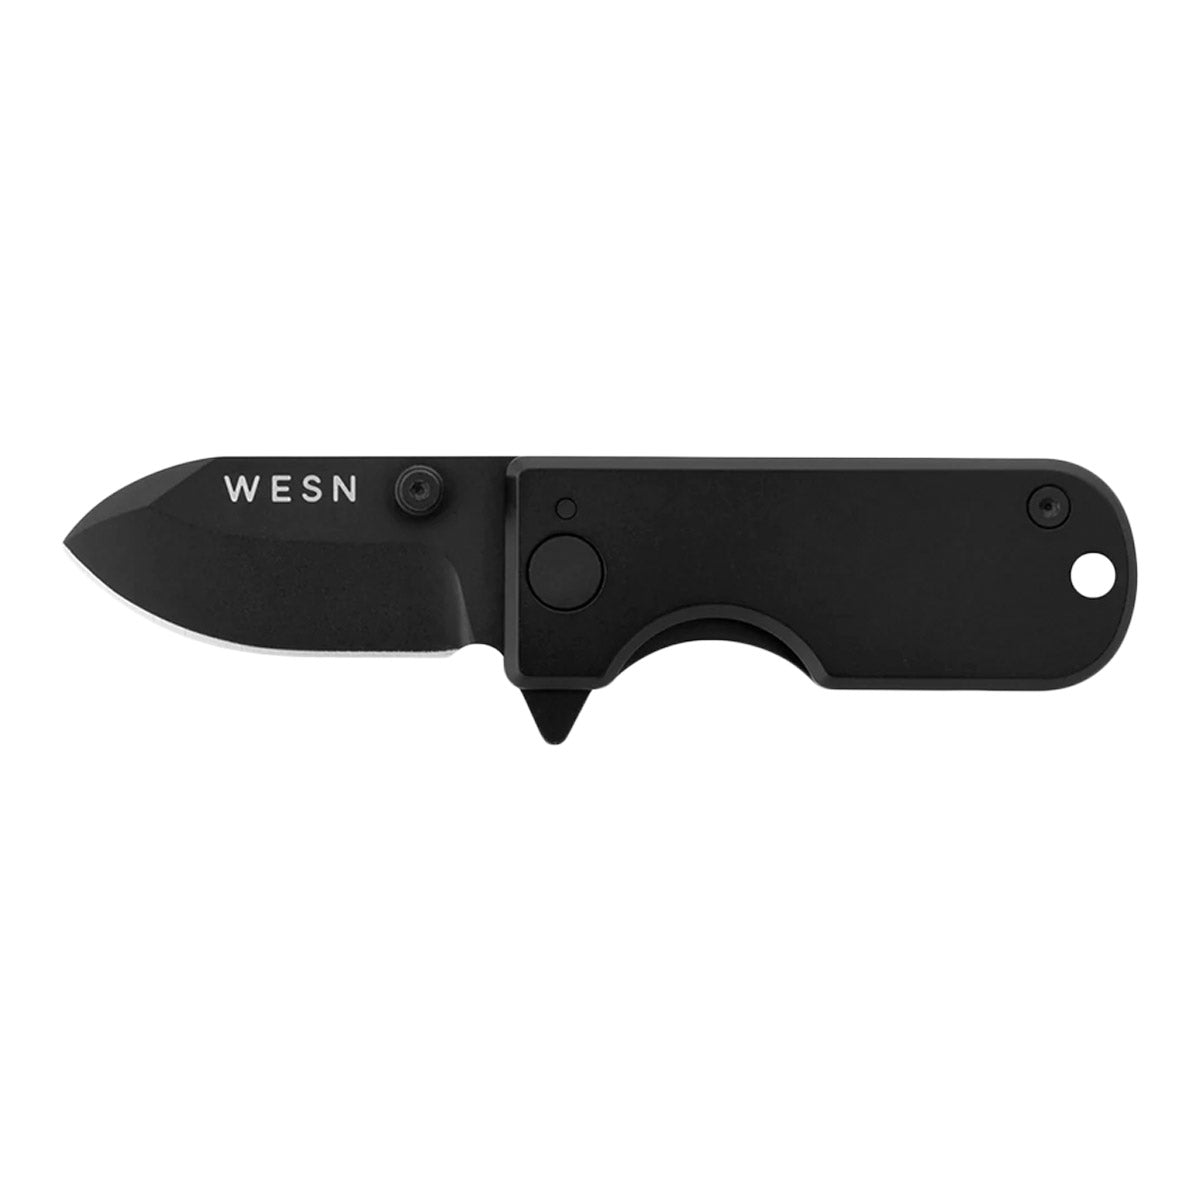 WESN Microblade Pocket Knife